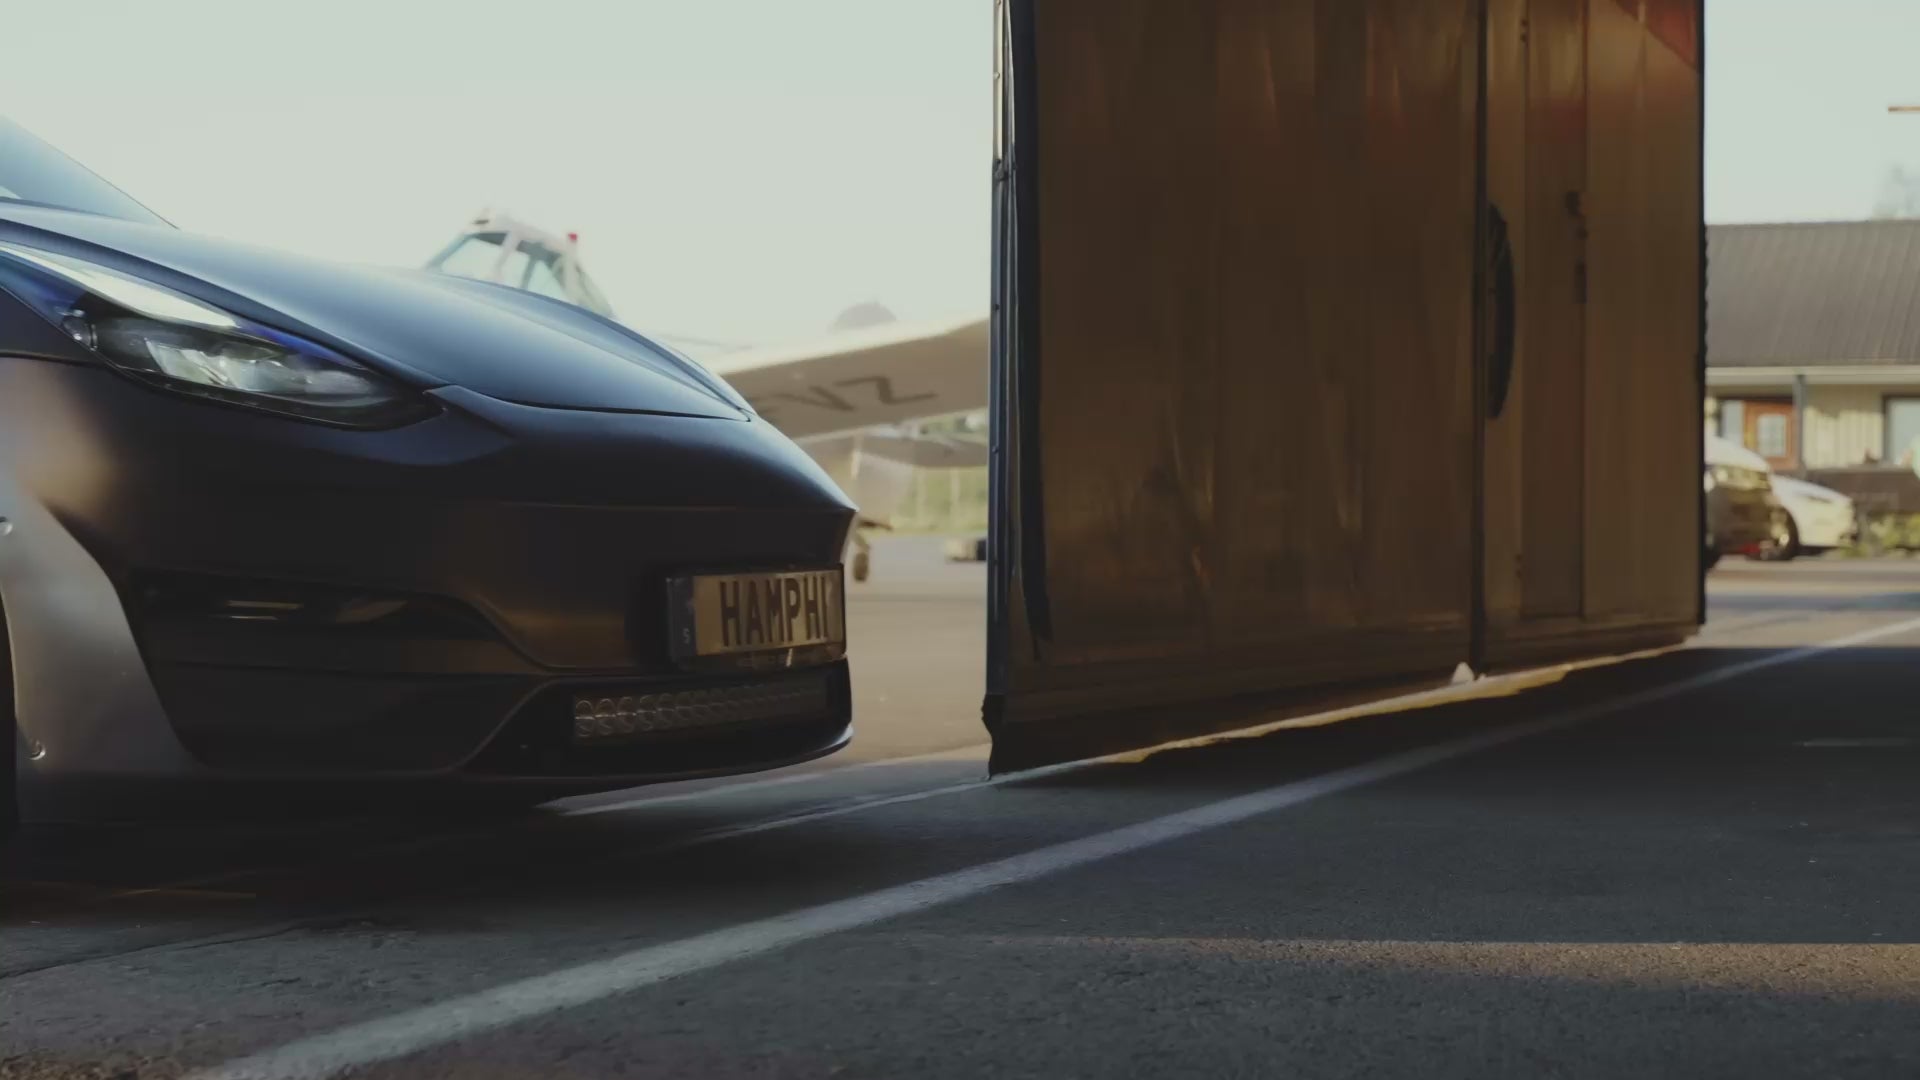 Load video: Hamphi Tesla in garage